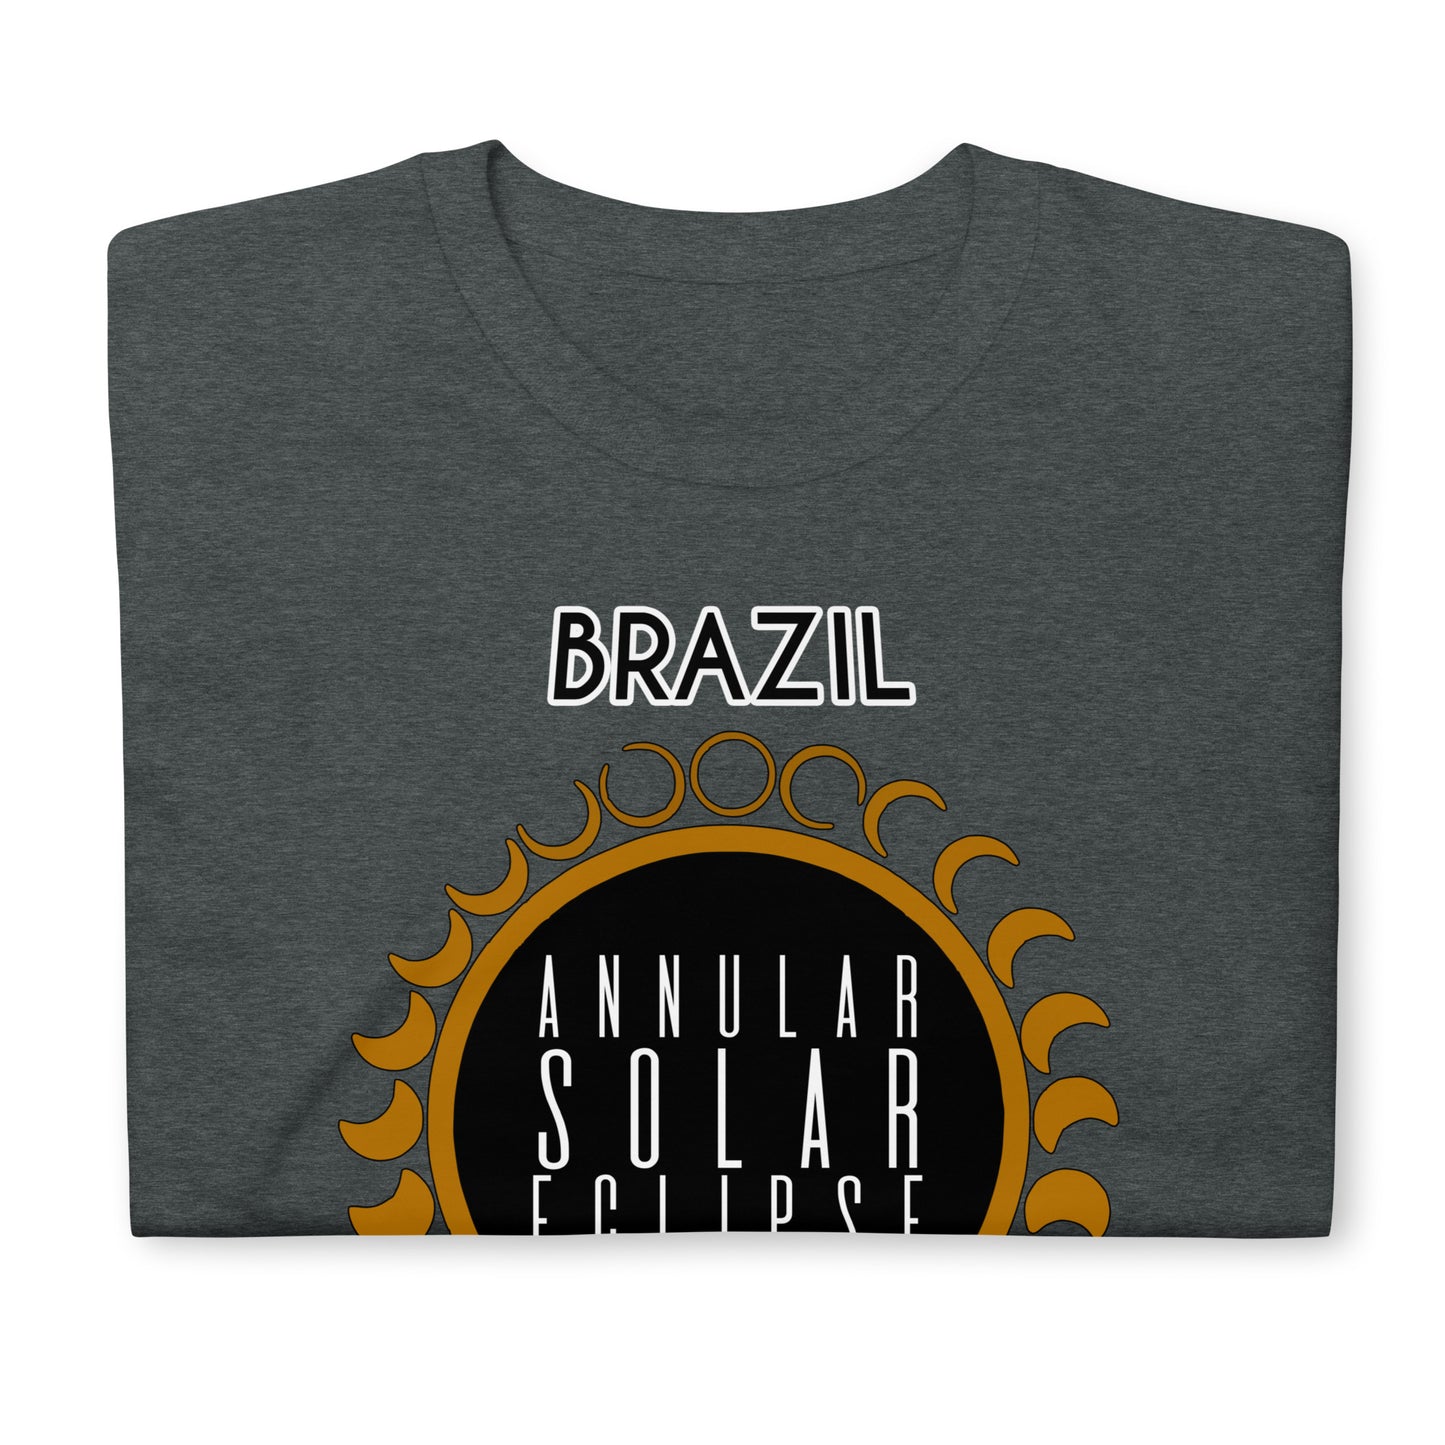 Annular Solar Eclipse - Brazil Rio Grande do Norte - Black Sun